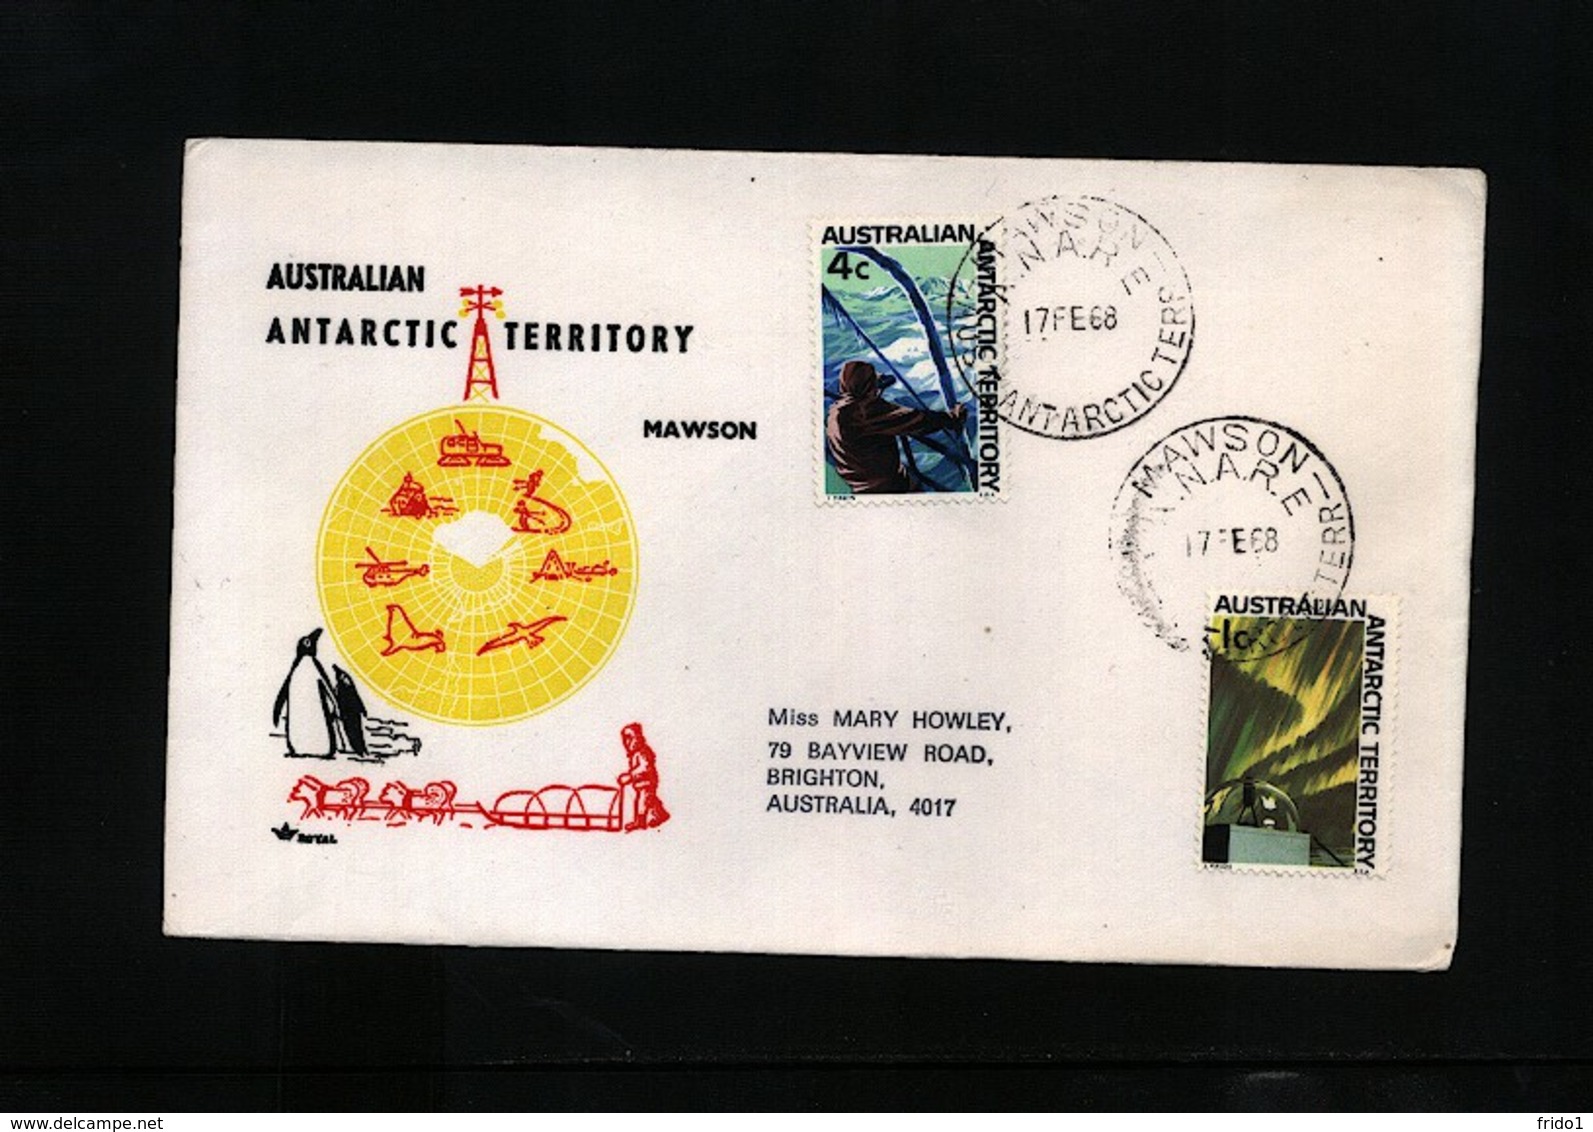 Australian Antarctic Territory 1968 Interesting Cover - Covers & Documents